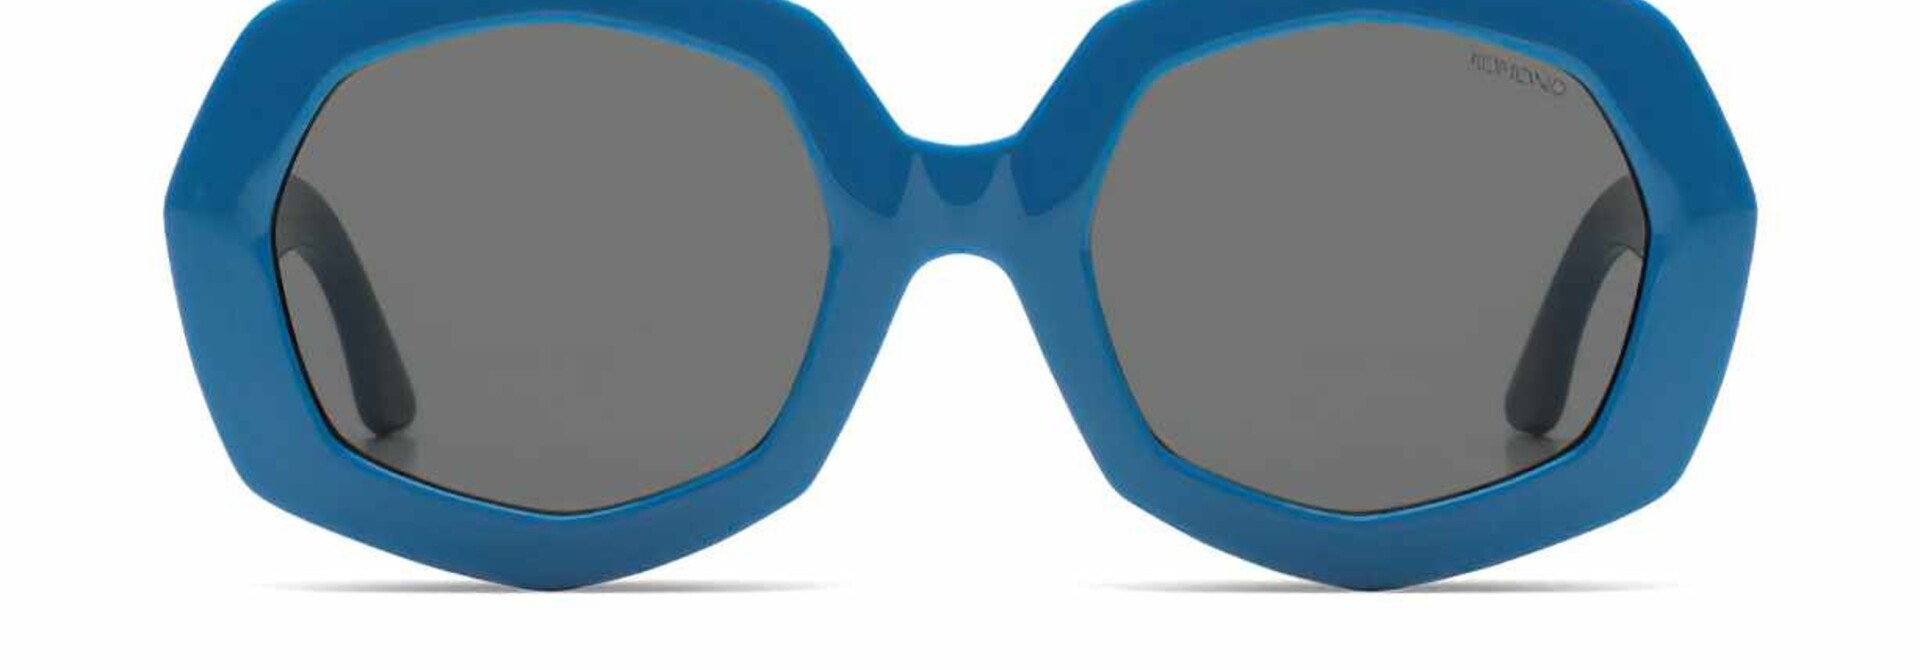 ♣ Amy Olympic Sunglasses